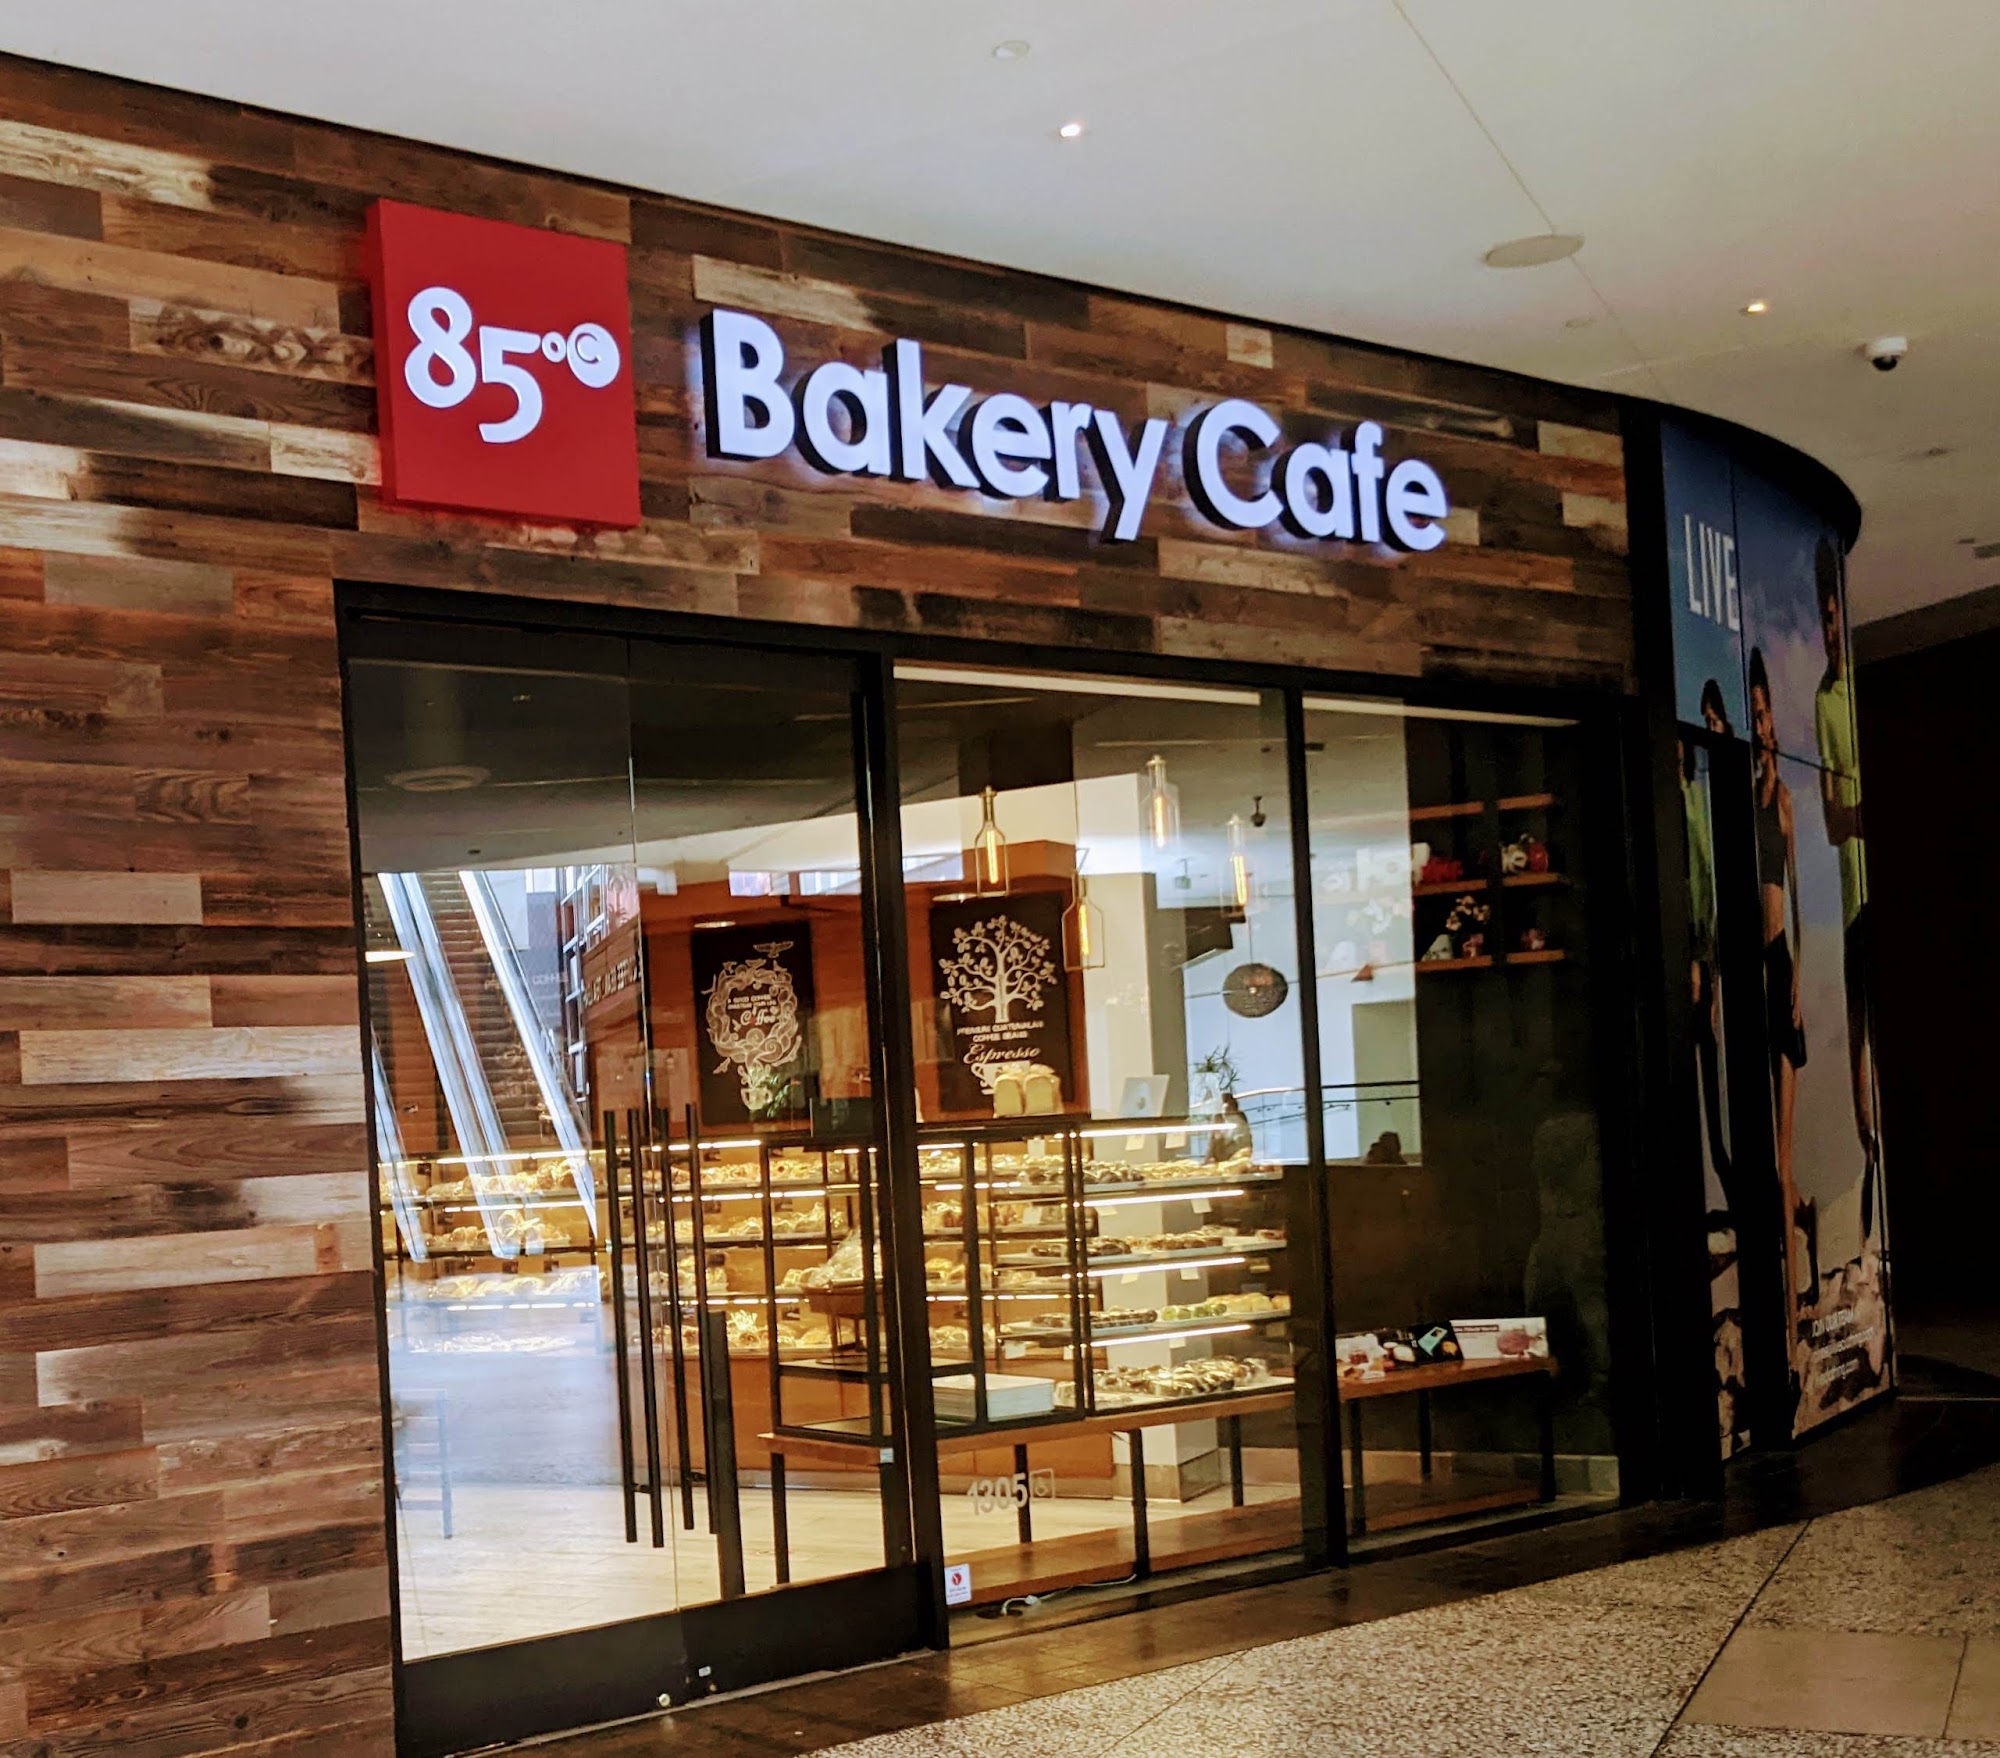 85°C Bakery Cafe - Century City